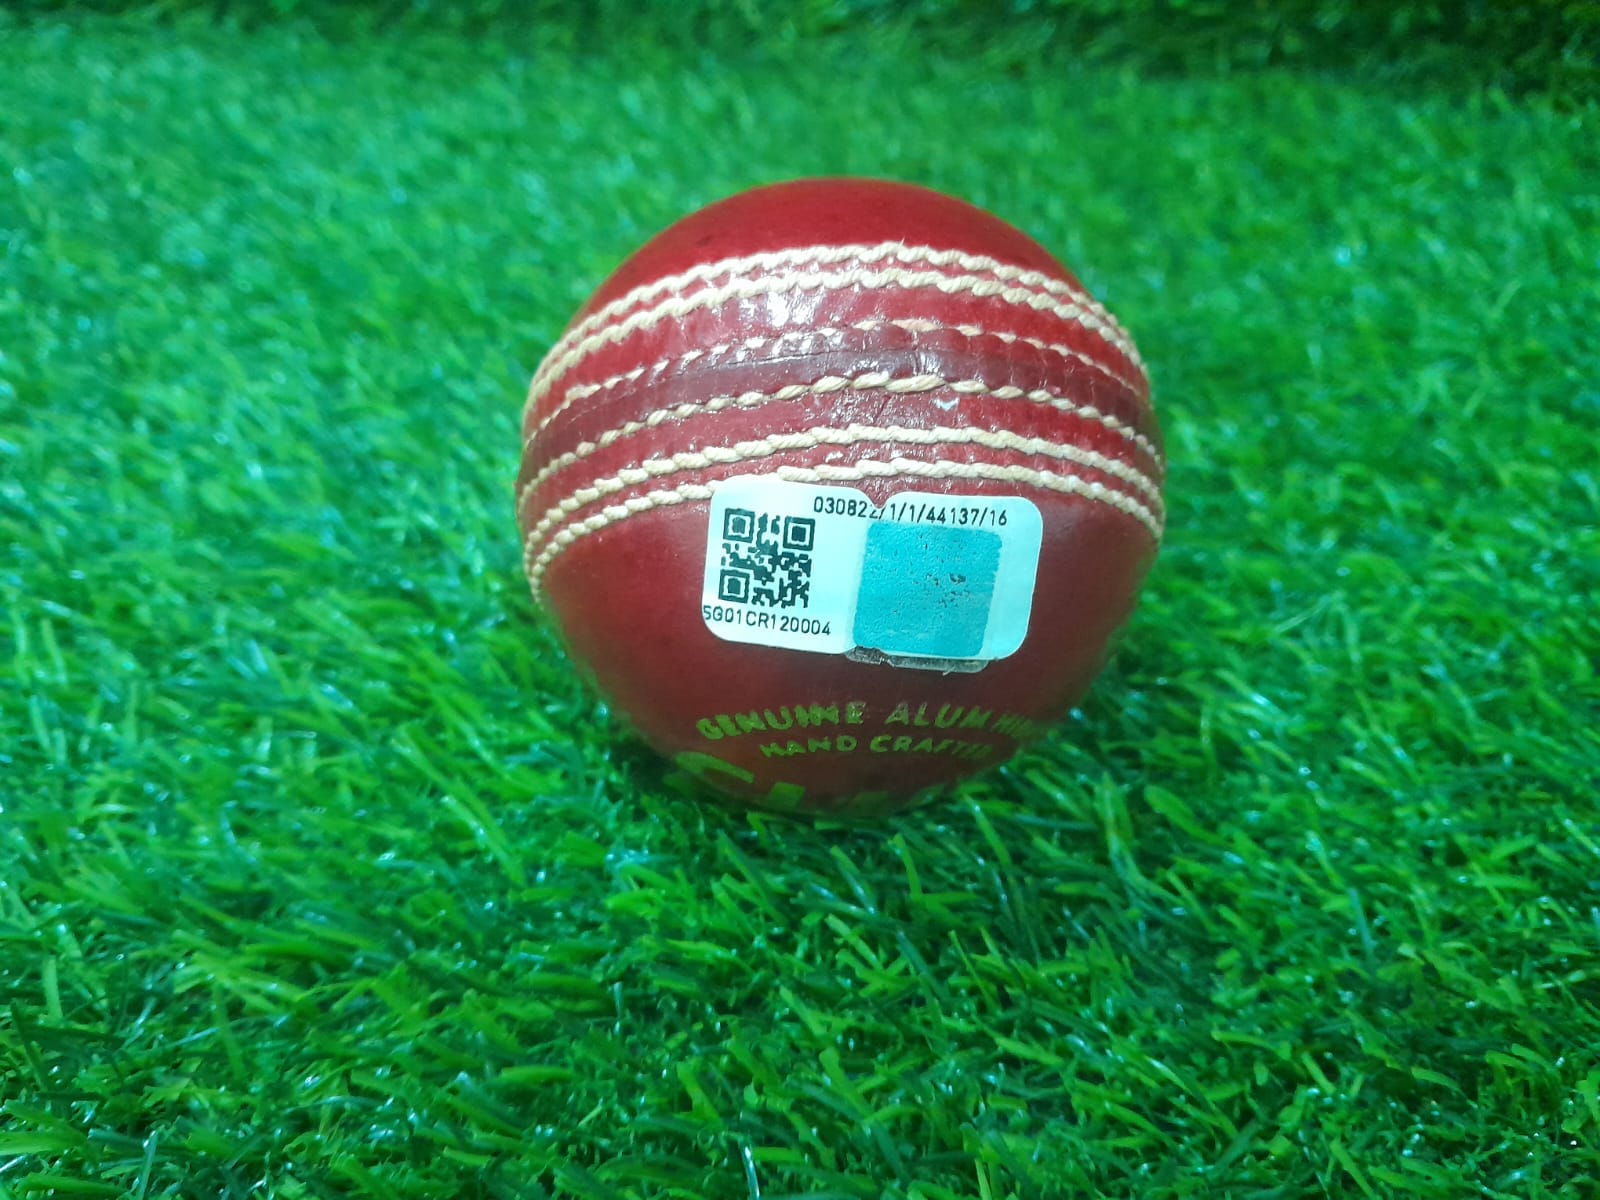 SG Club Red Cricket Ball 6 Ball set